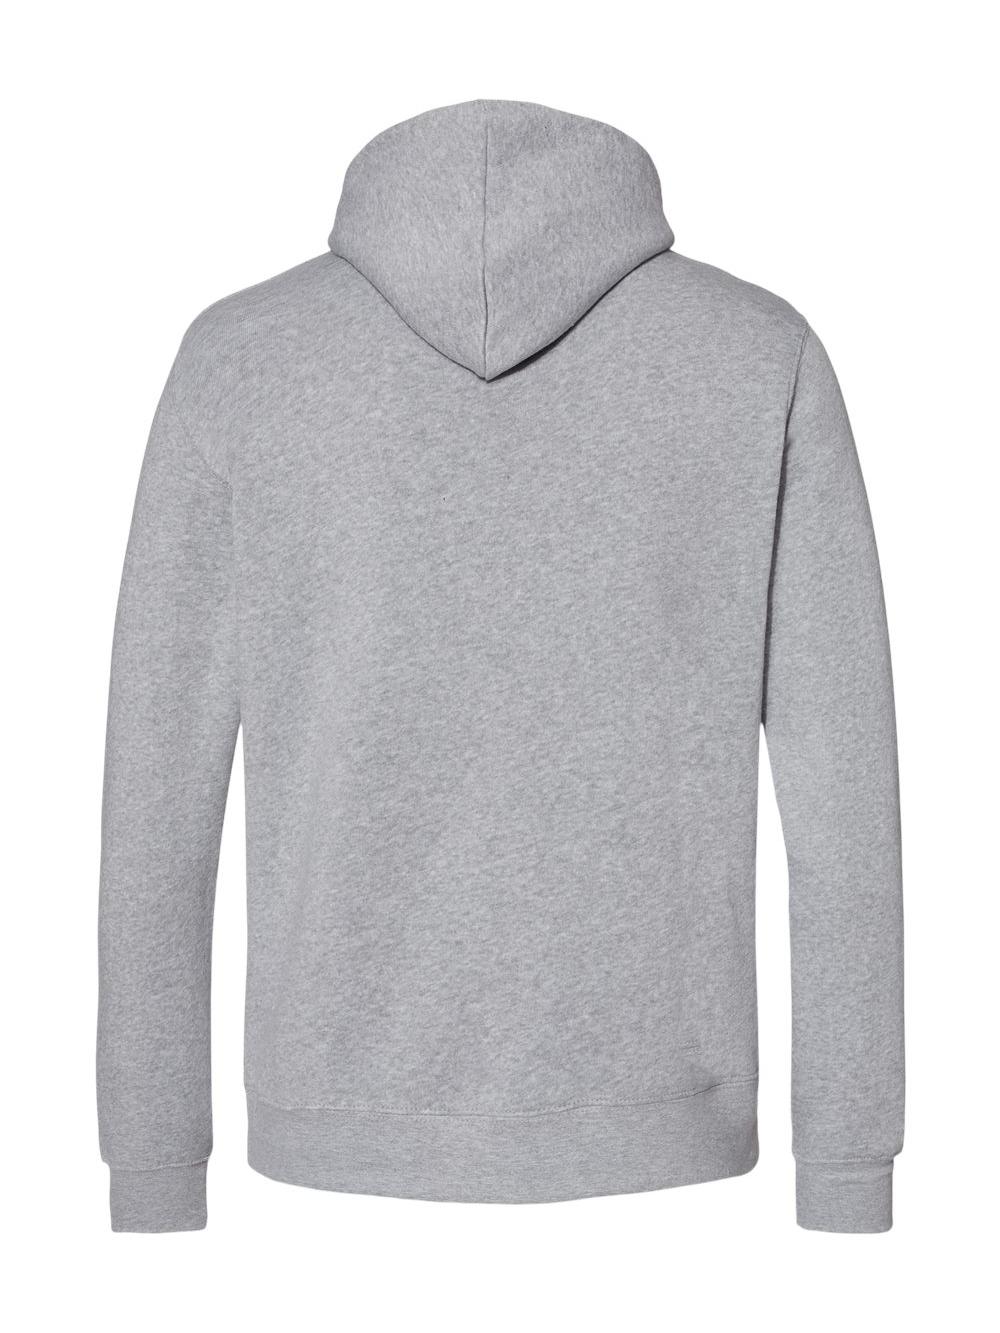 J. America - New Men - IWPF - Gaiter Fleece Hooded Sweatshirt - image 2 of 2